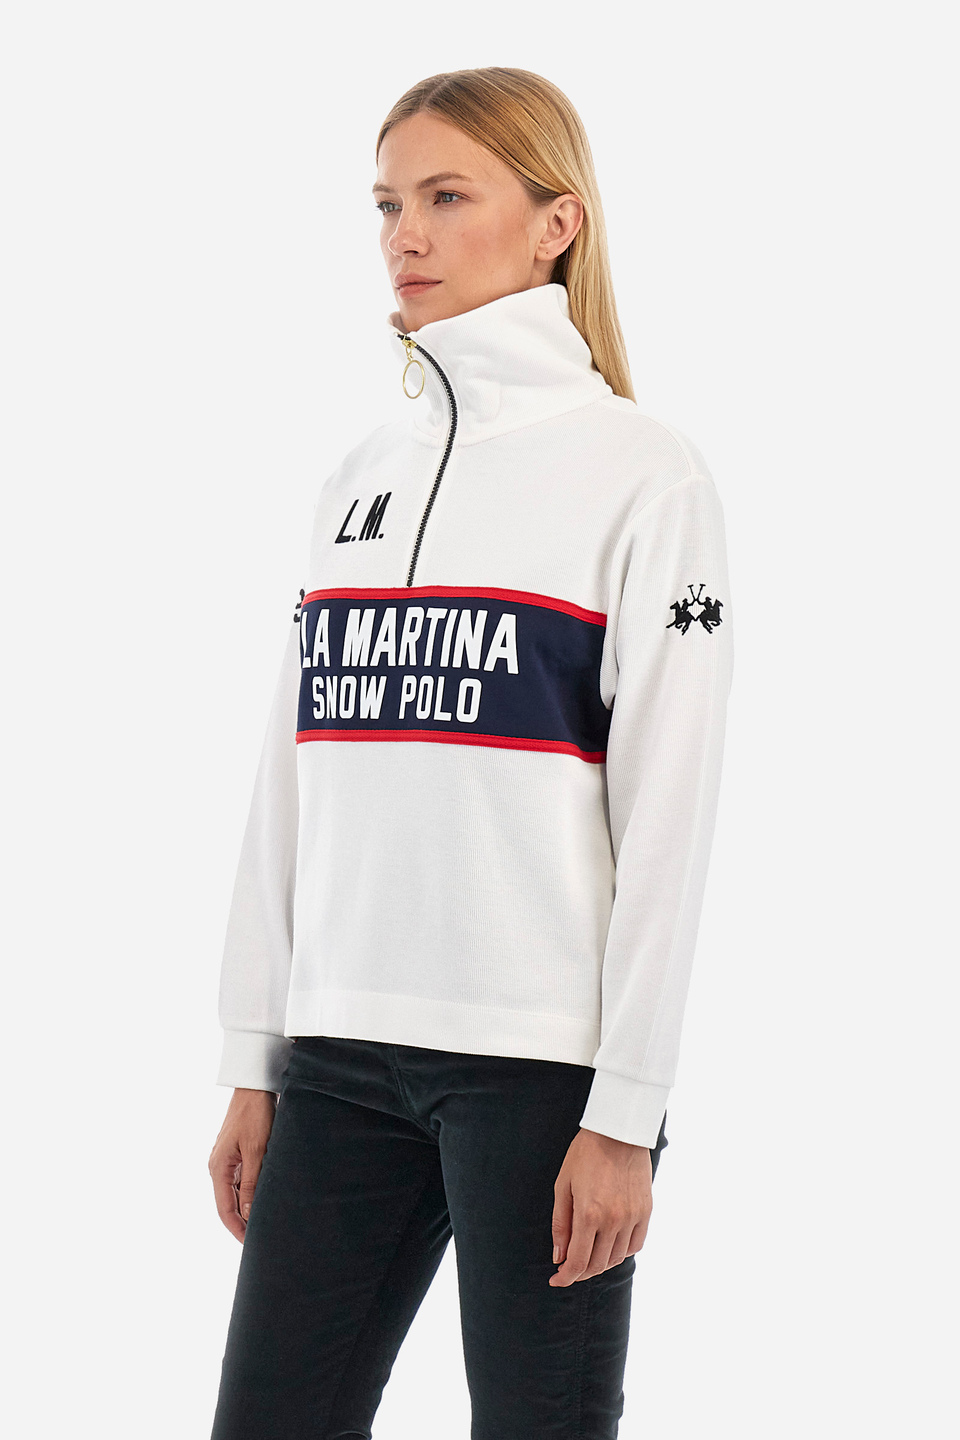 Damen -Sweatshirt regular fit - Weylin | La Martina - Official Online Shop